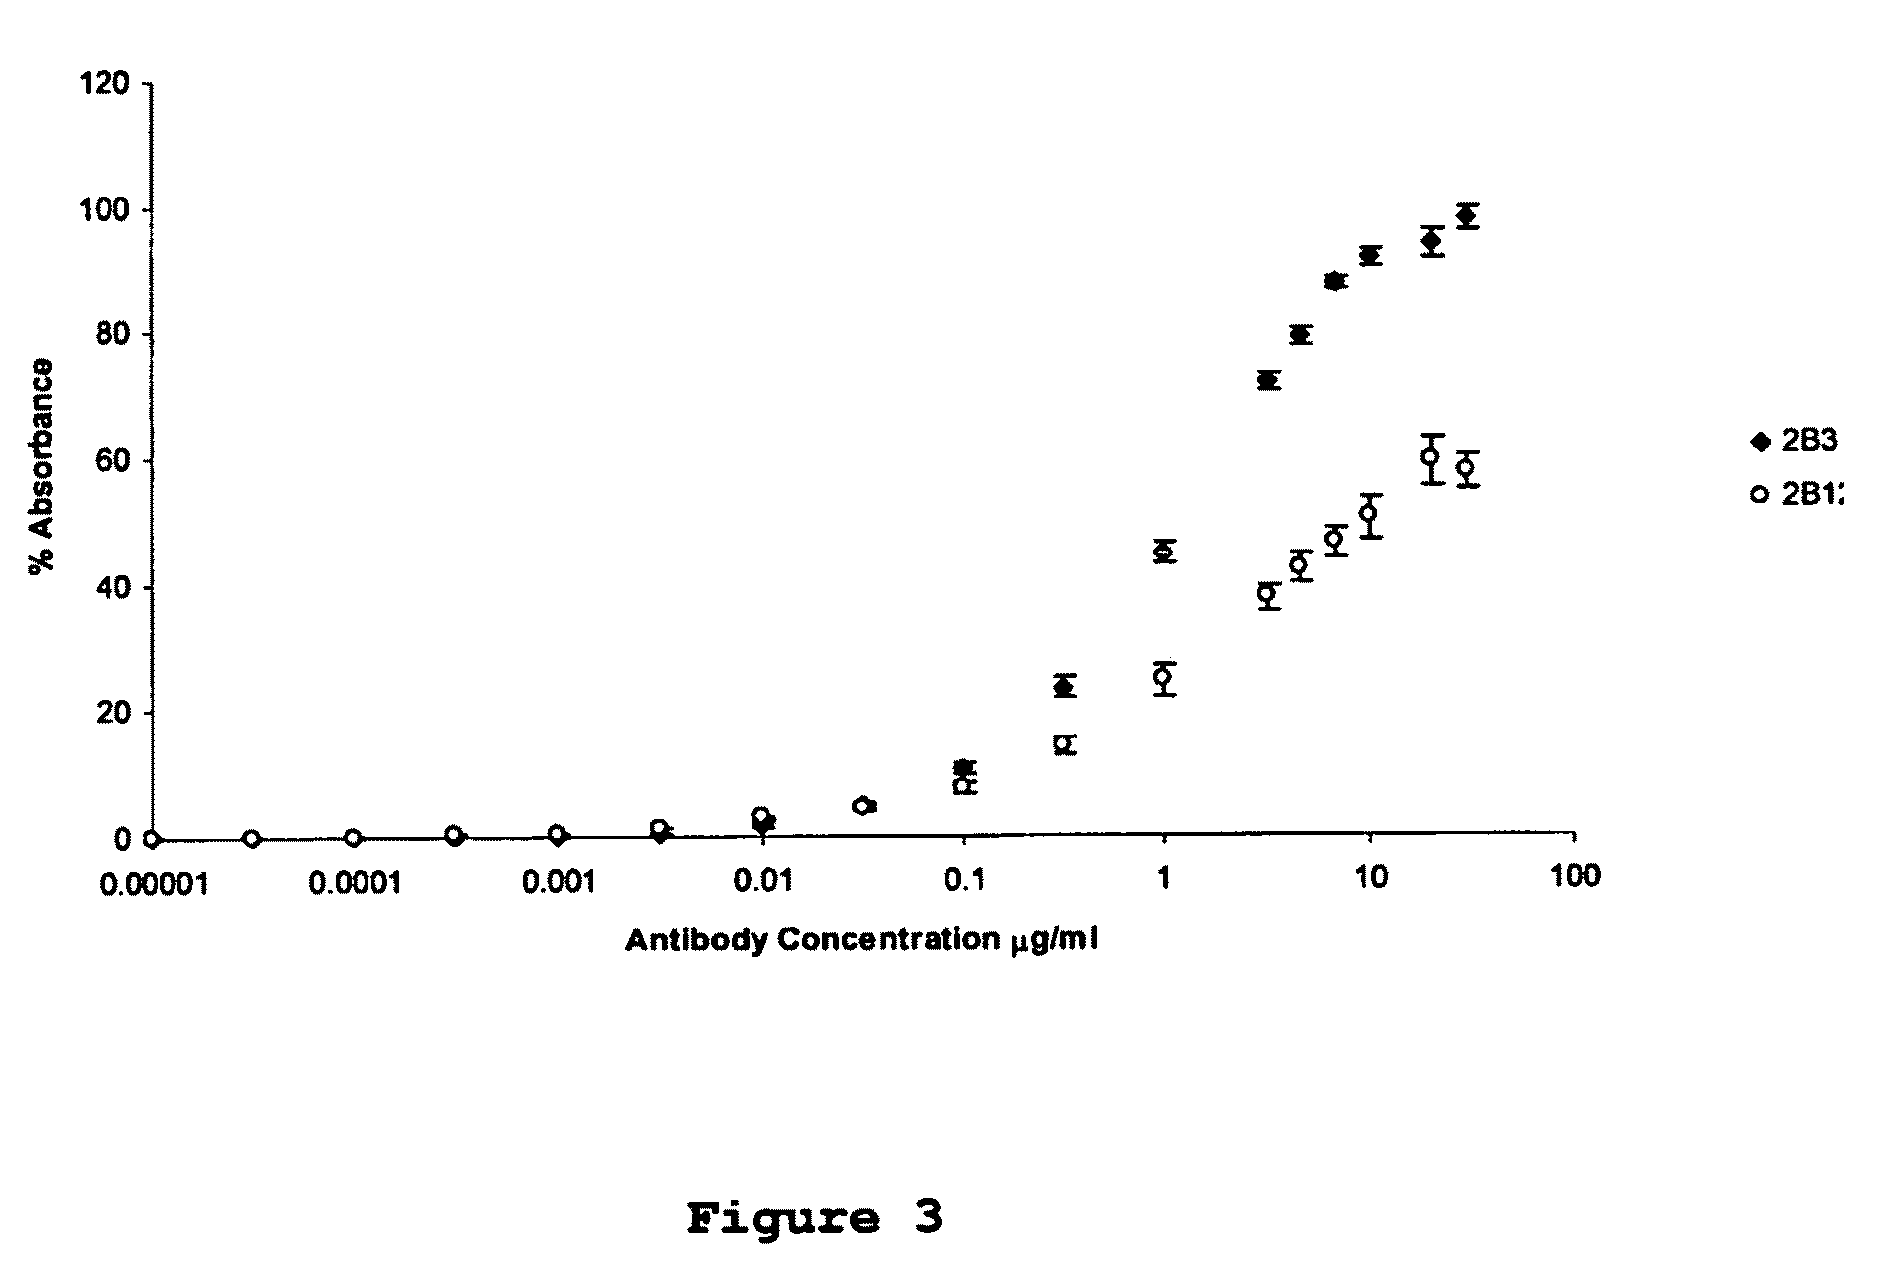 Monoclonal antibody for APP